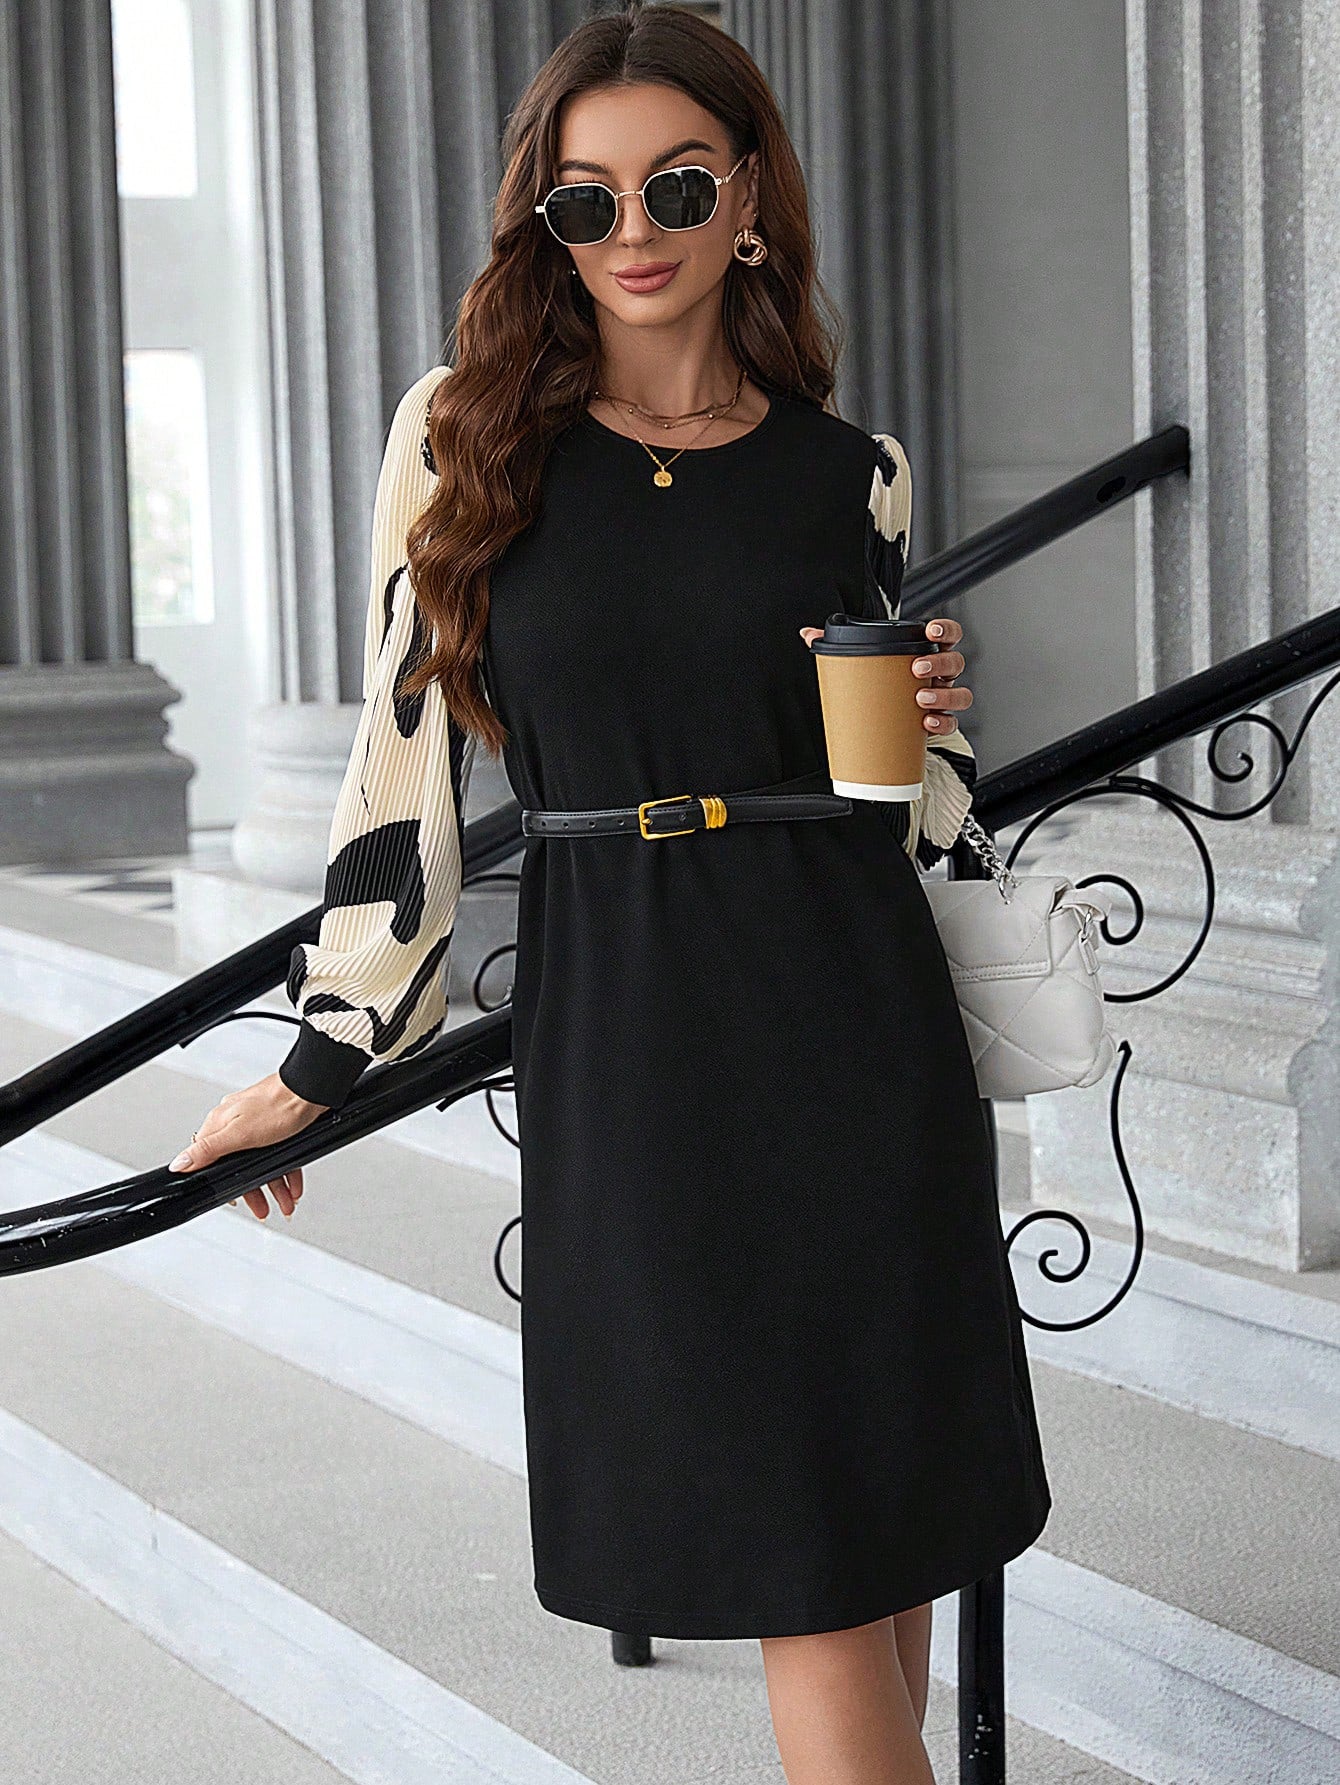 EMERY ROSE Women's Fashionable Black Skirt Splice Color Long Sleeve Dress